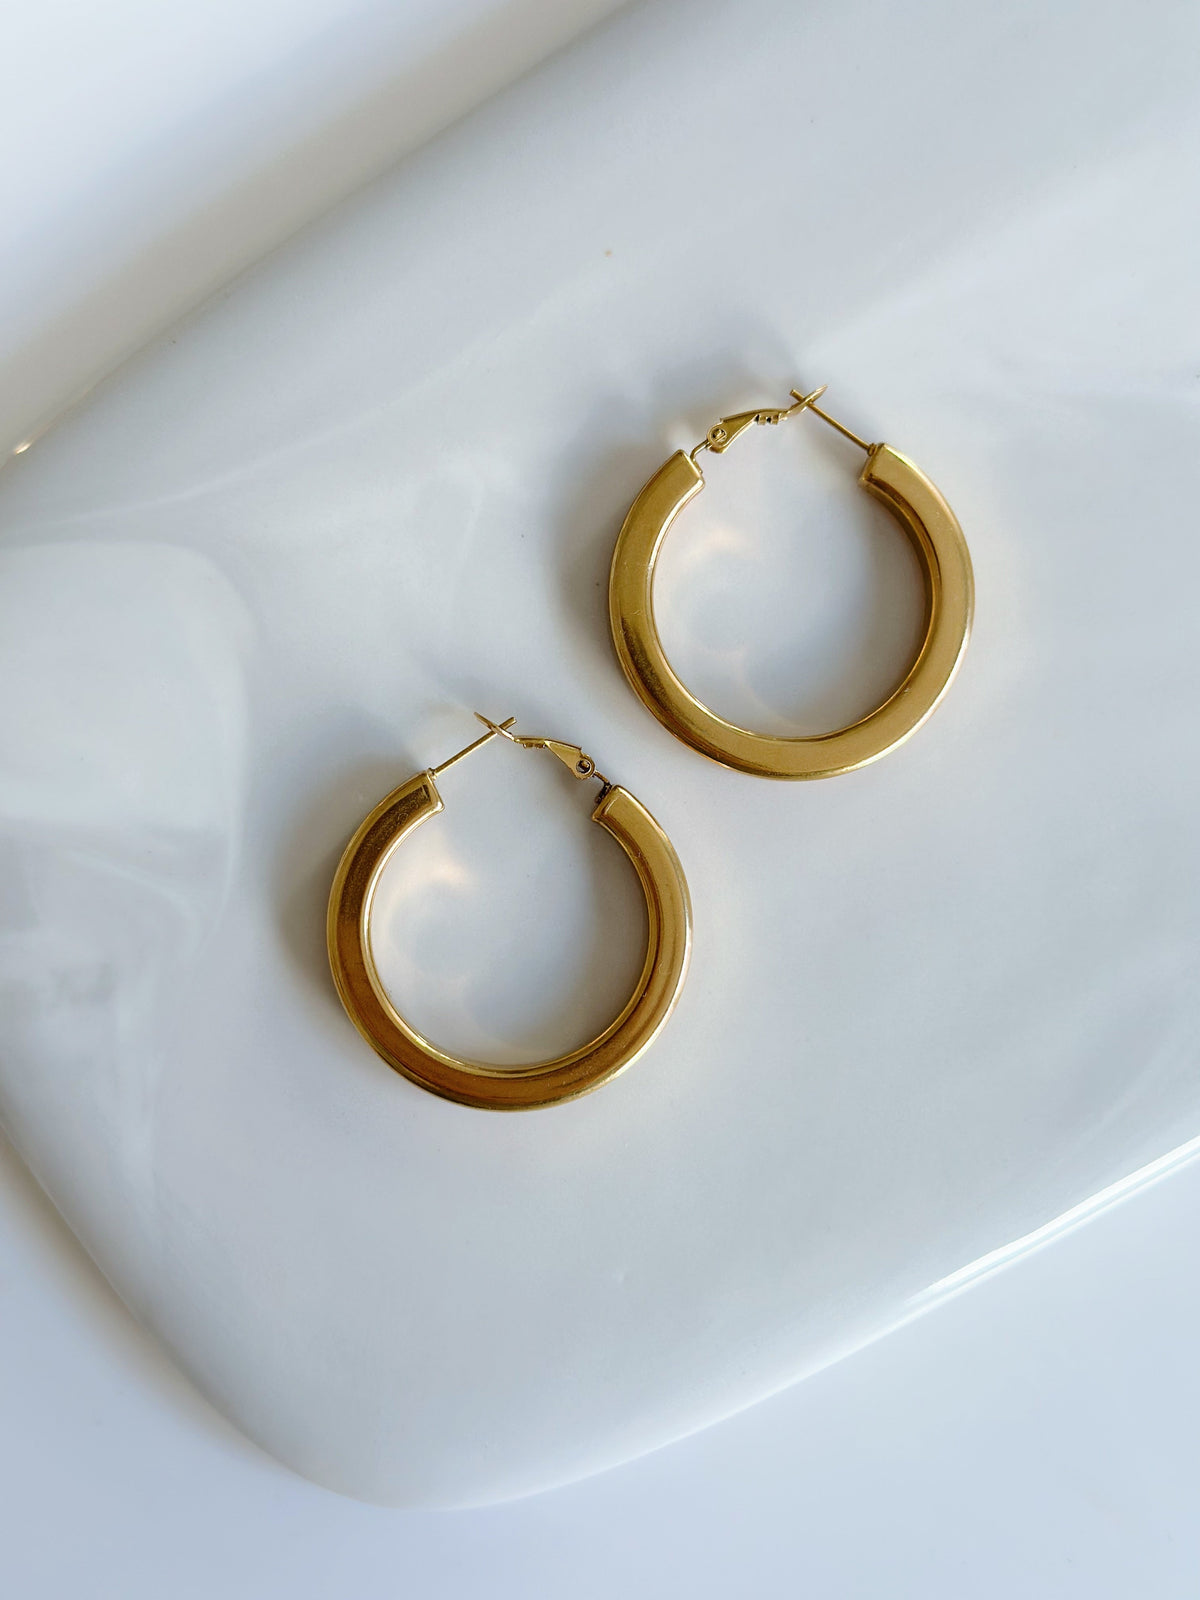 Sofia ring earrings